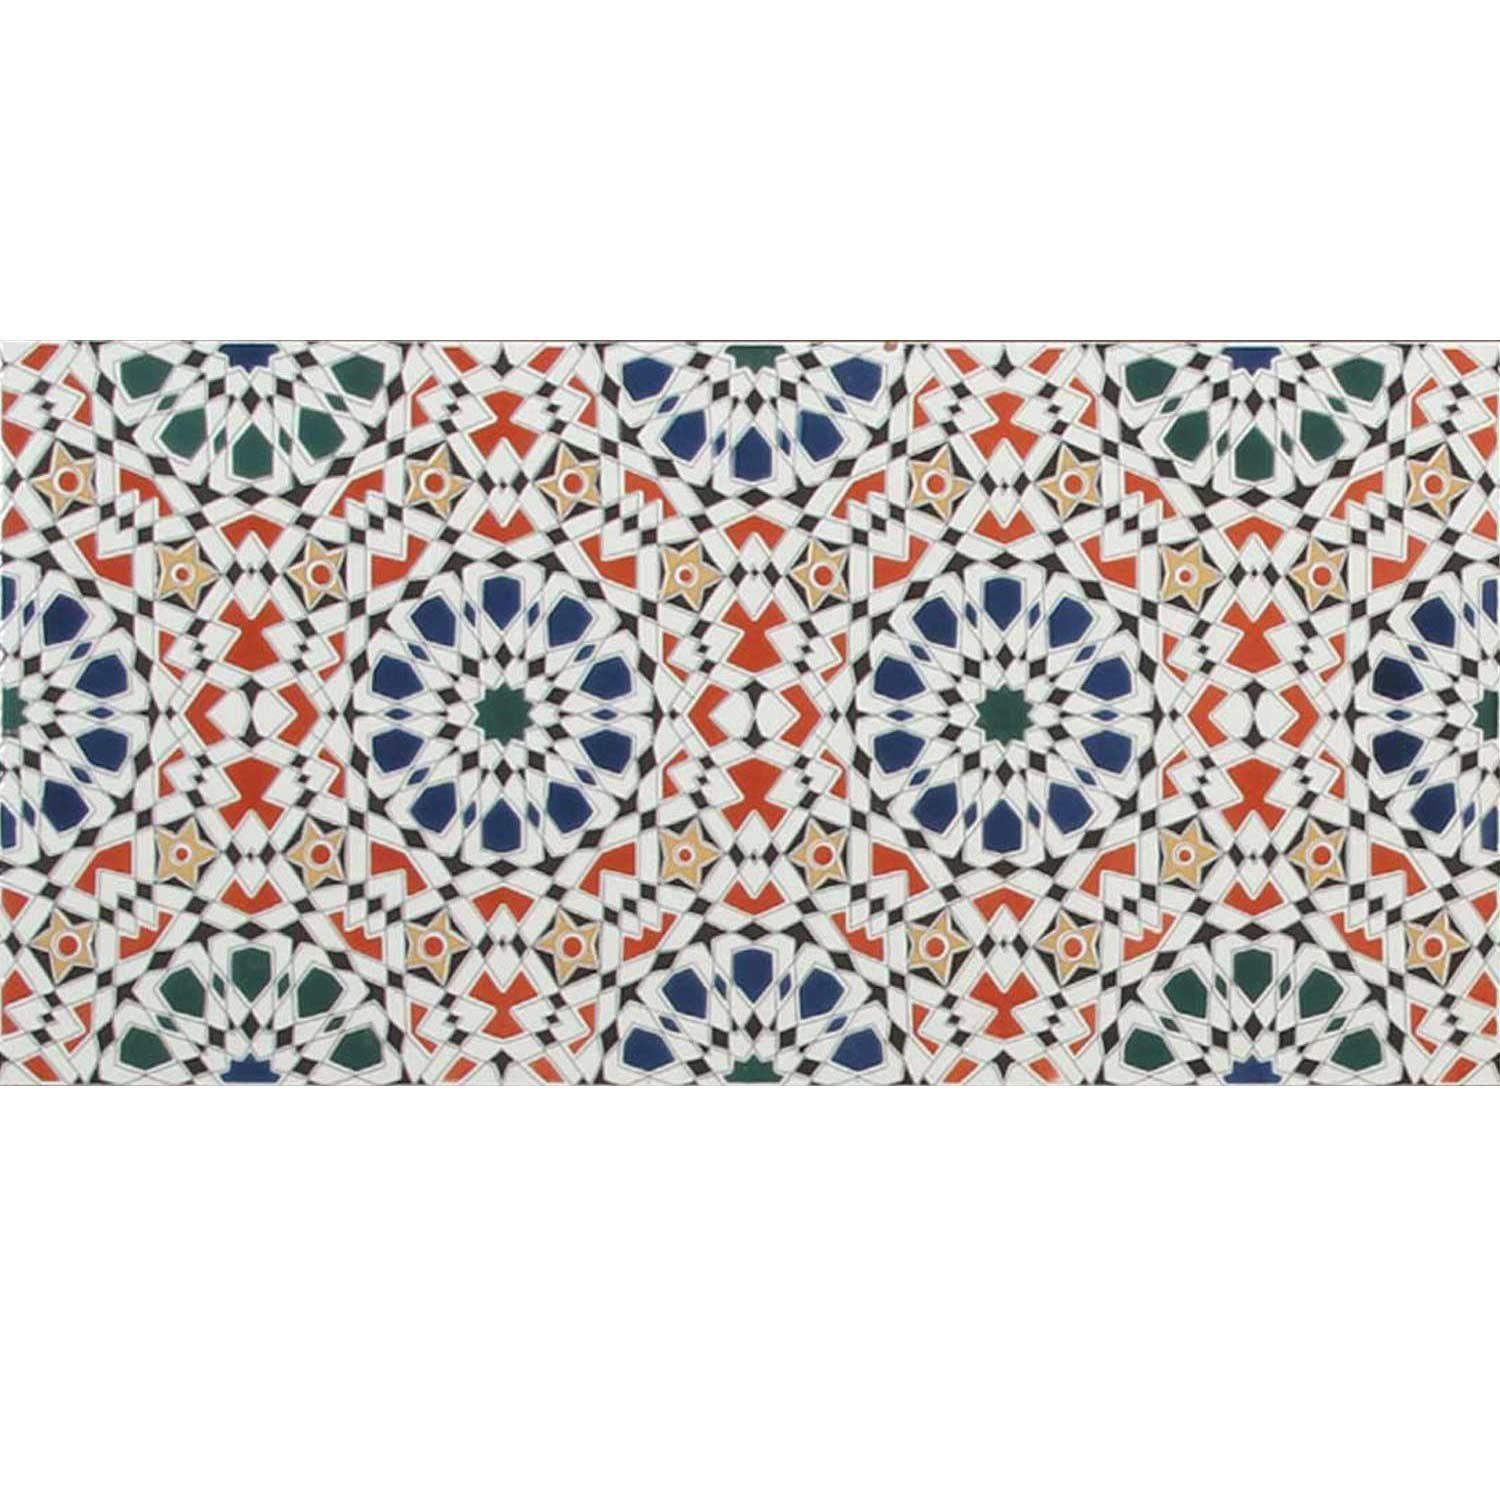 Casa Moro Wandfliese qm Marokkanische bunt Mosaik-Muster, Muster Fliesen cm 50x25 1 Liman mit Endlos